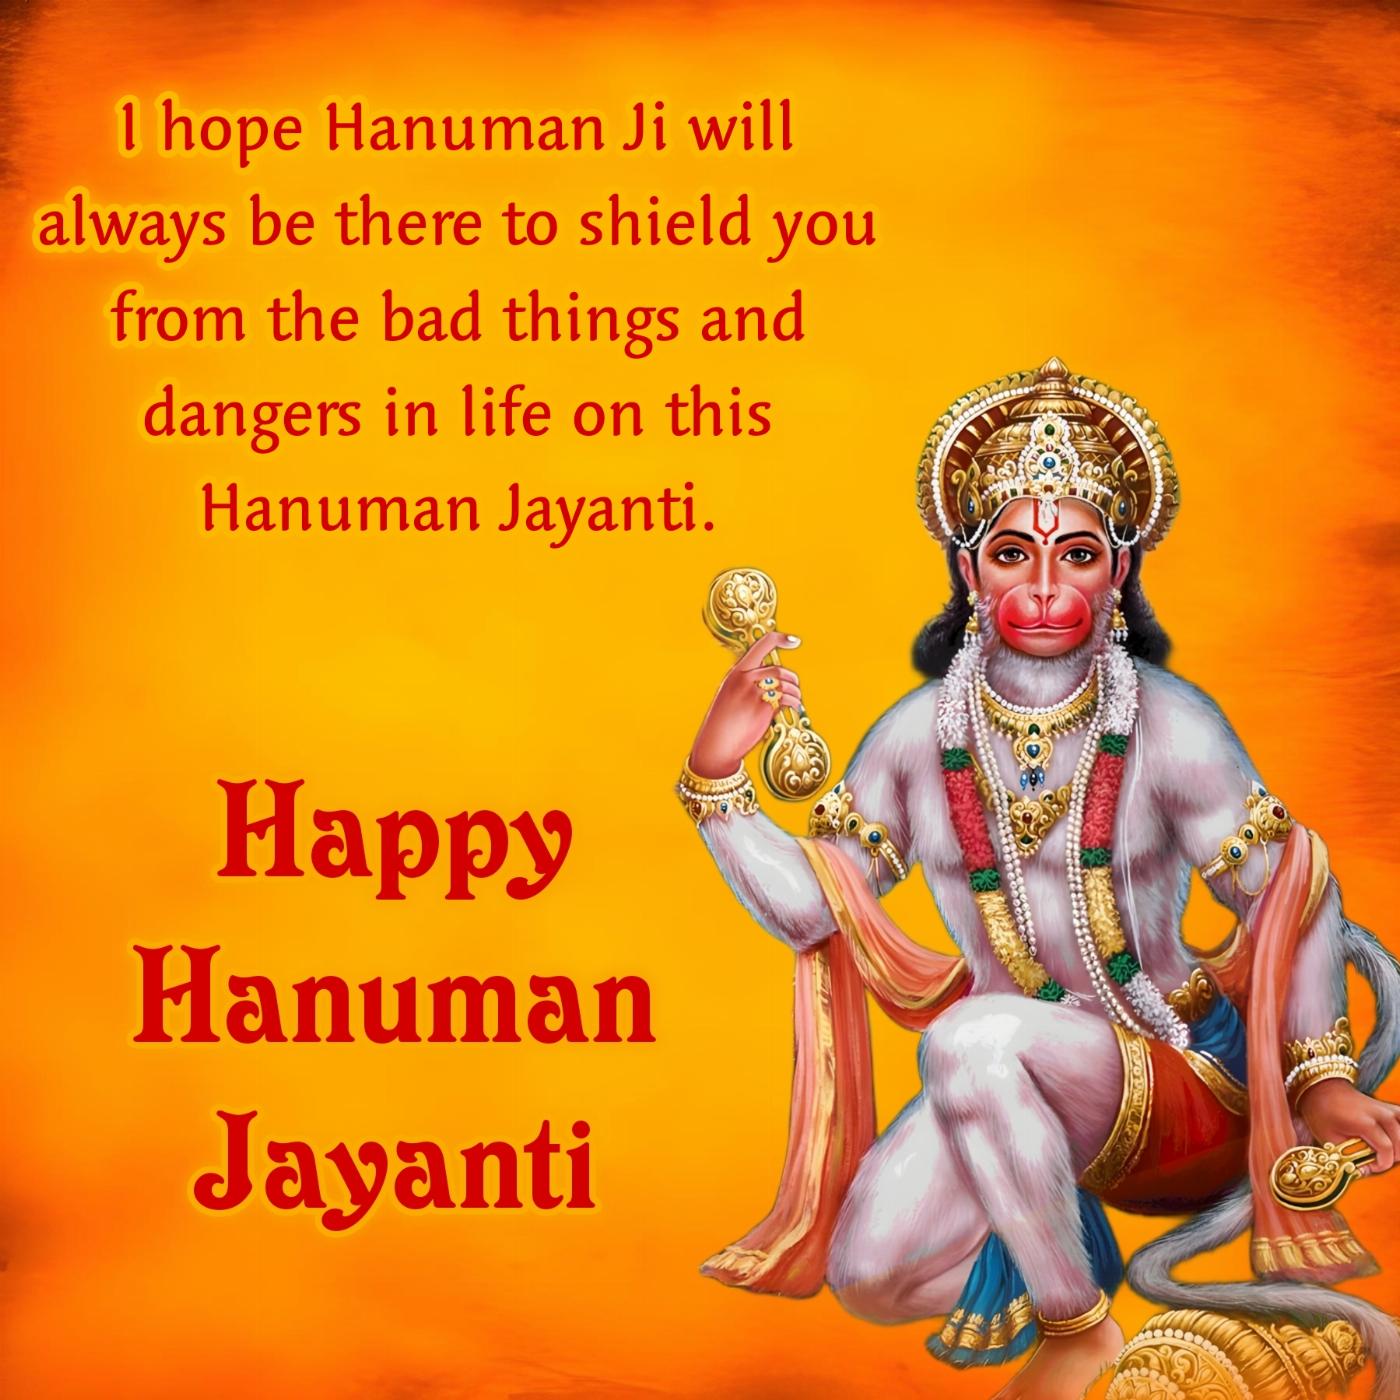 I hope Hanuman Ji will always be there to shield